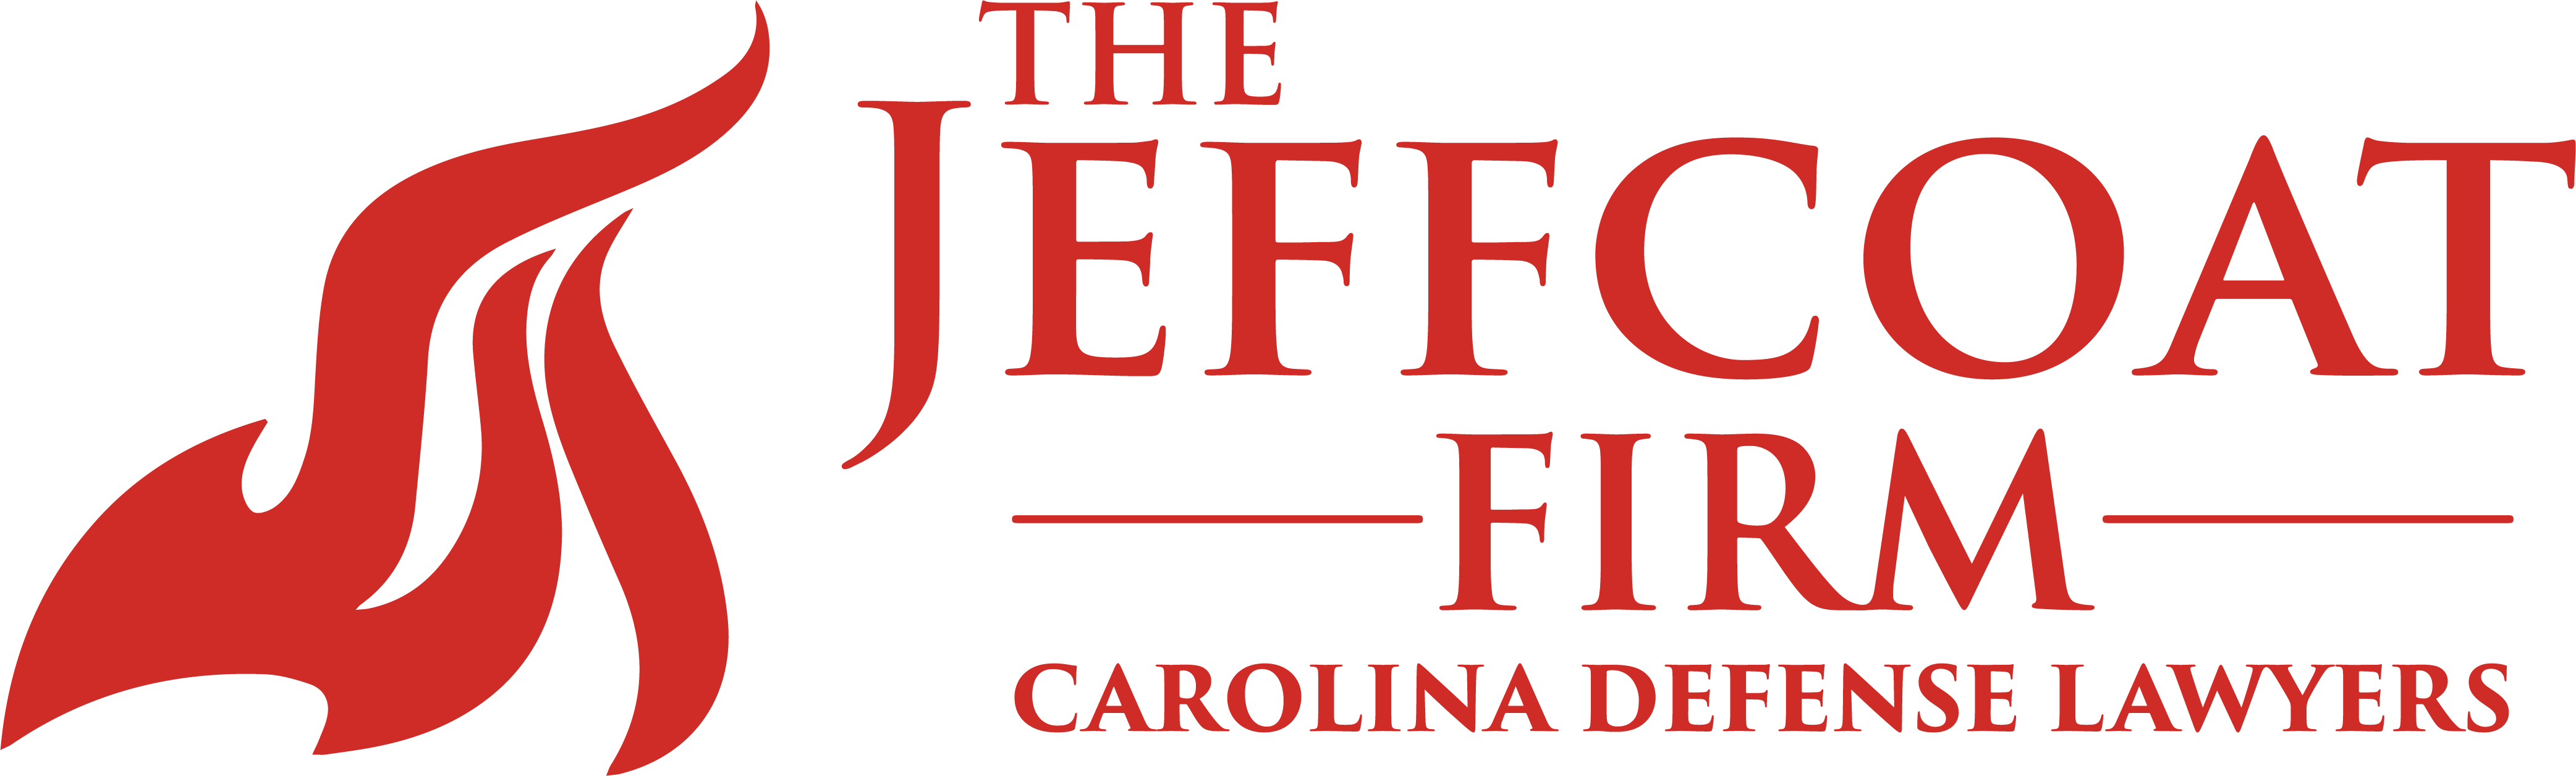 Jeffcoat Firm logo